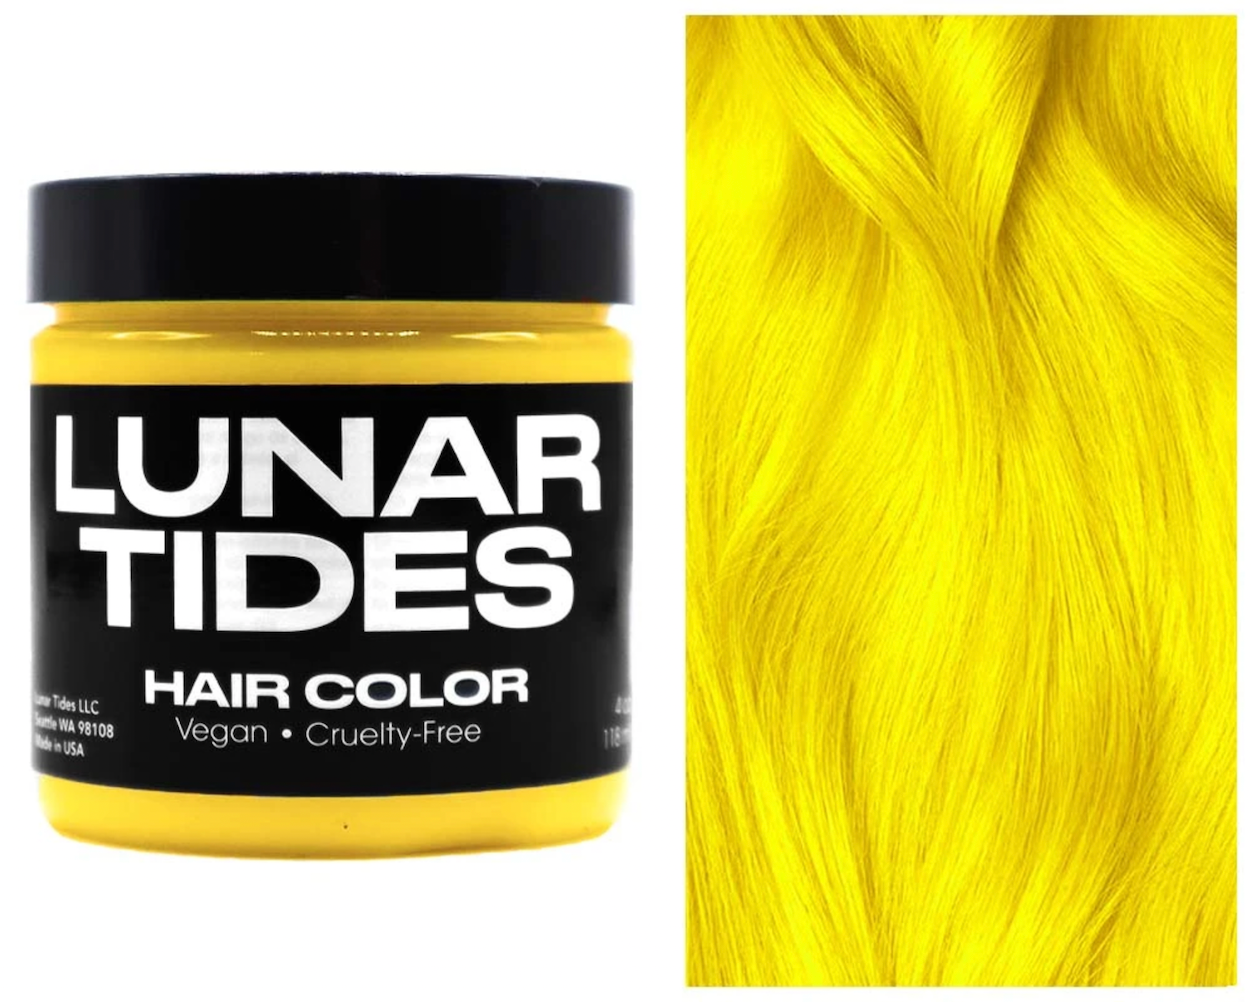 Lunar Tides Hair Dye - Citrine Yellow